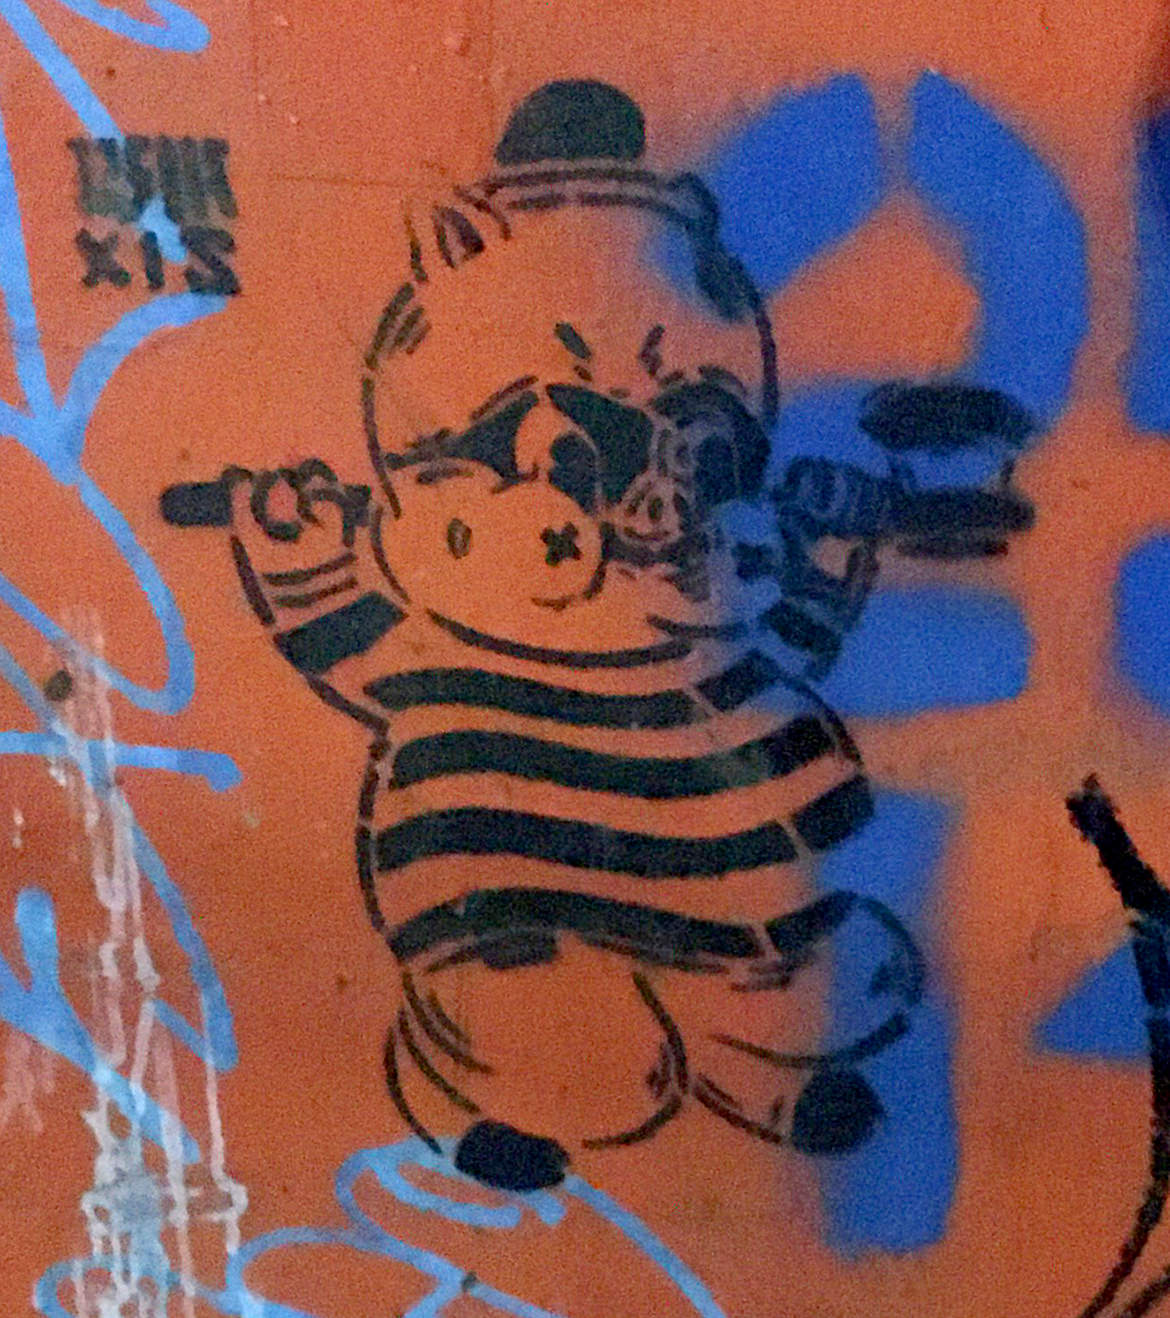 Stencil grafitti of a crooked pig